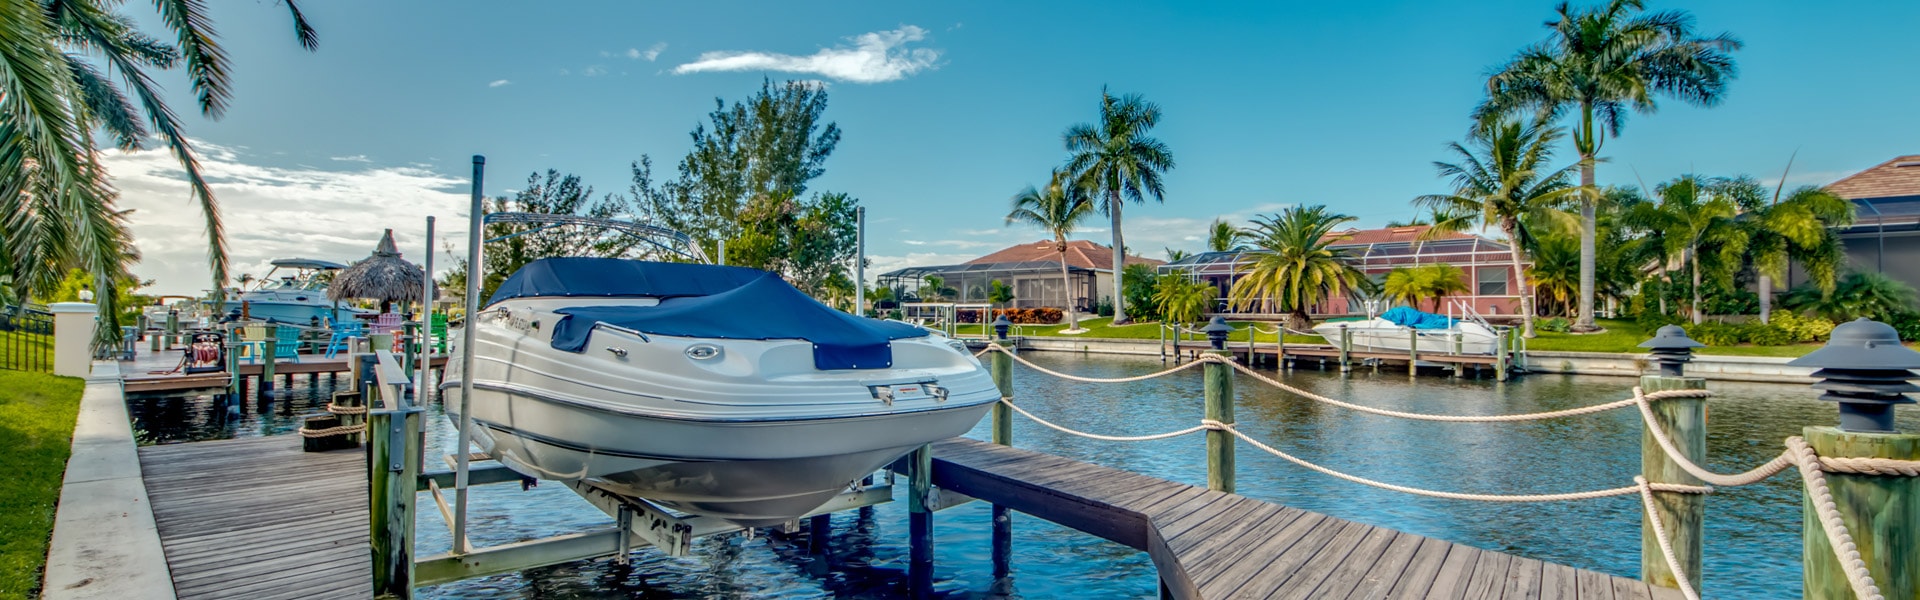 Gulf Coast Florida villas